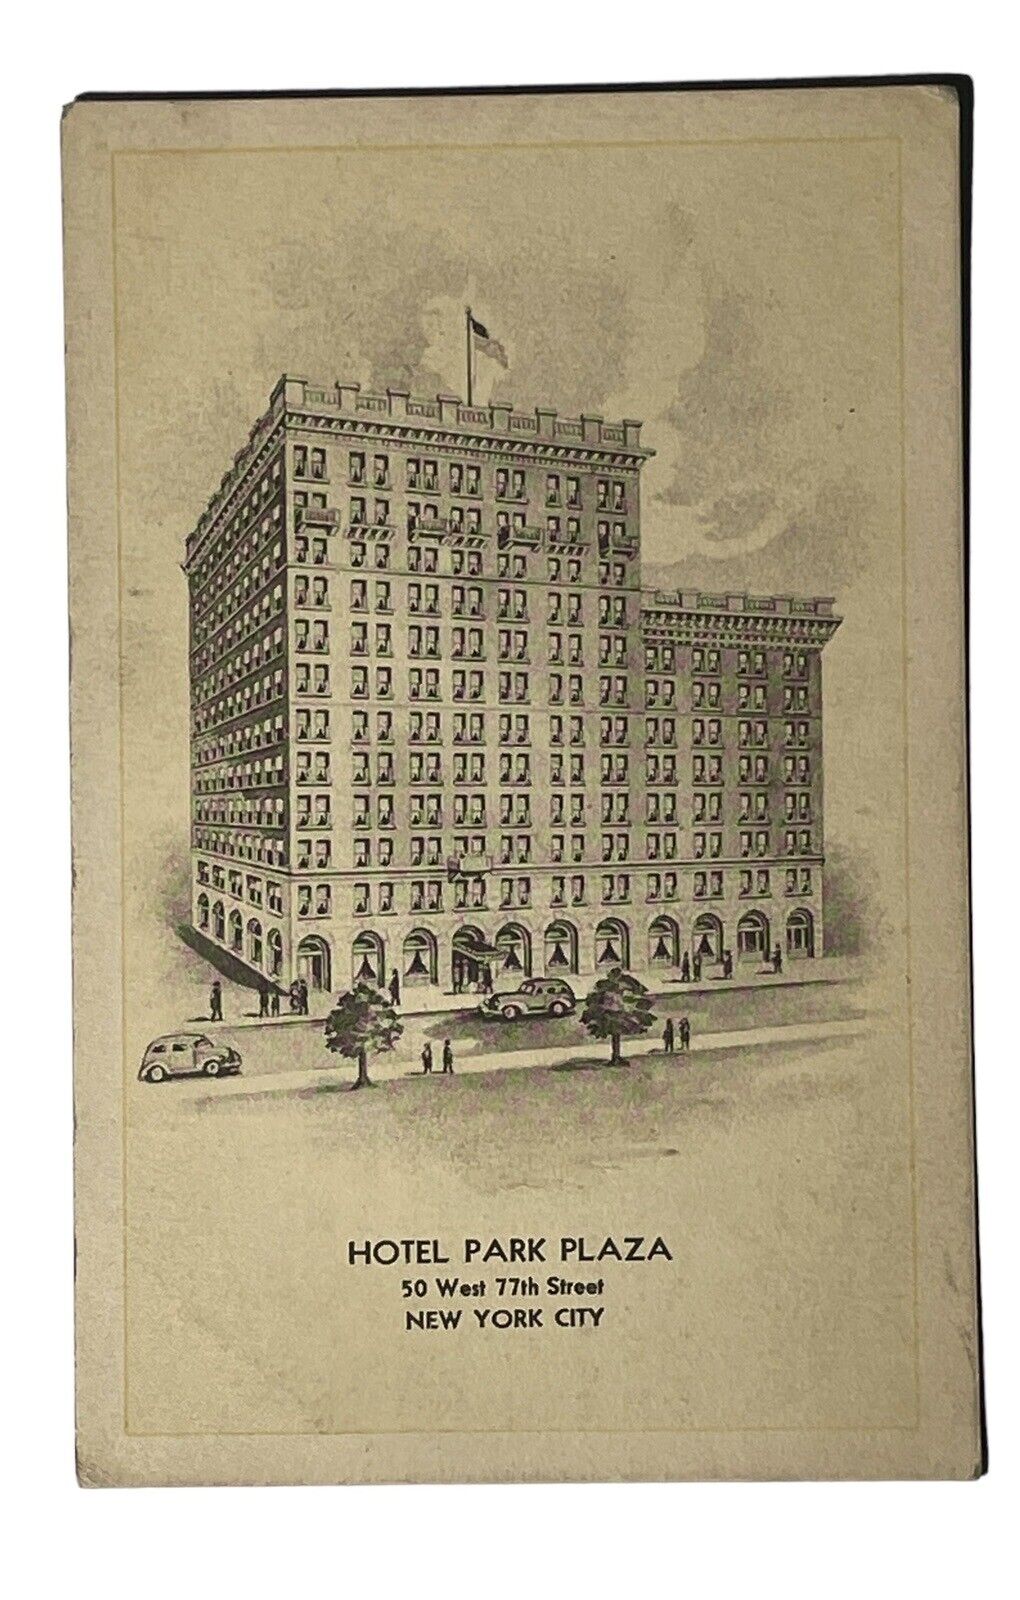 VTG Hotel Park Plaza Postcard 50 West 77th Street New York City Rare Manger Note